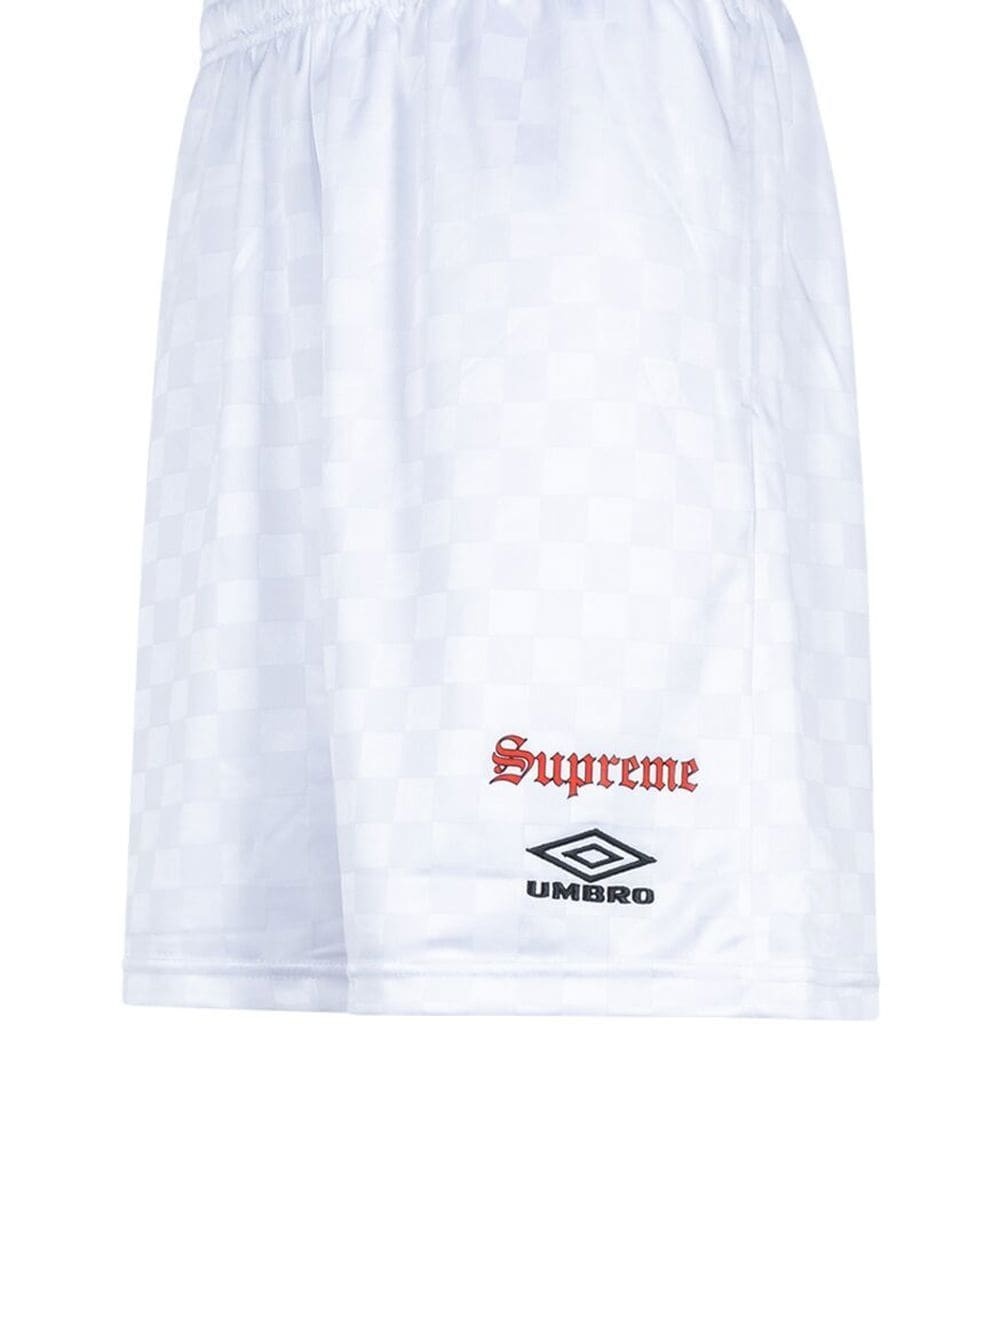 x Umbro soccer shorts - 3